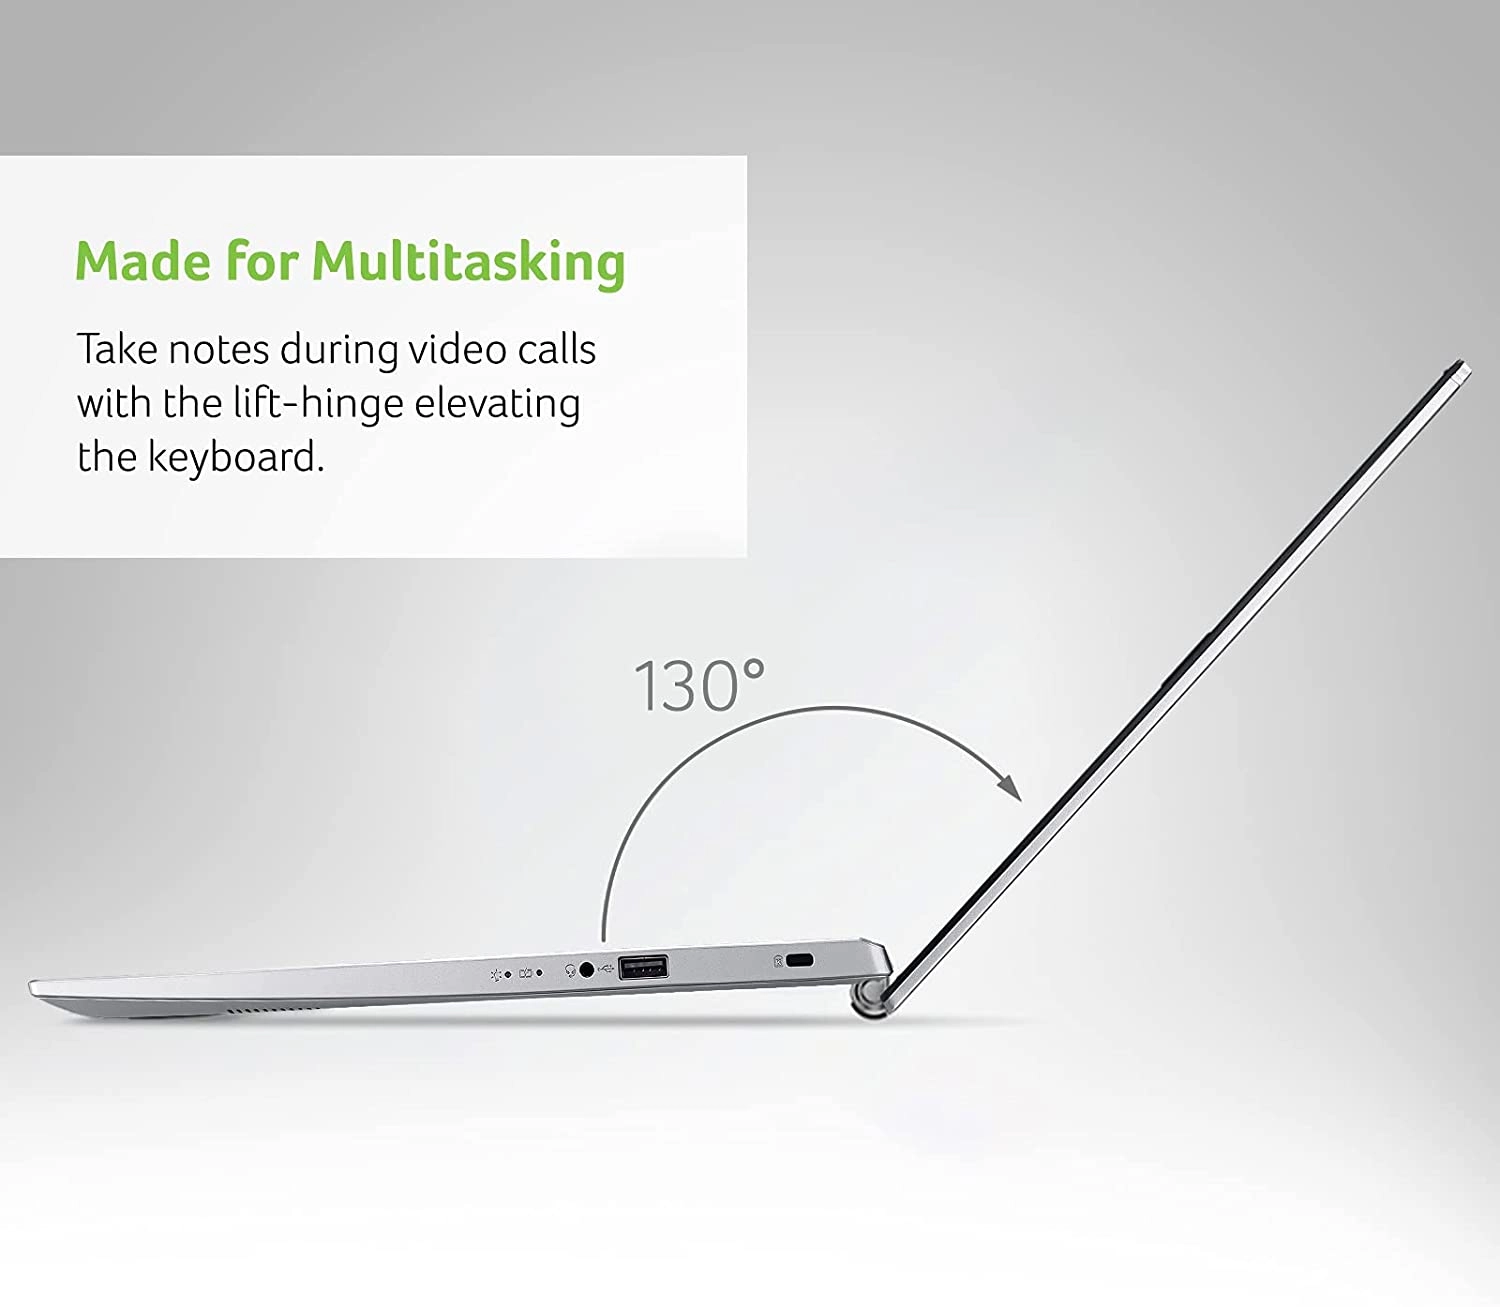 Acer A515-56-36UT laptop image